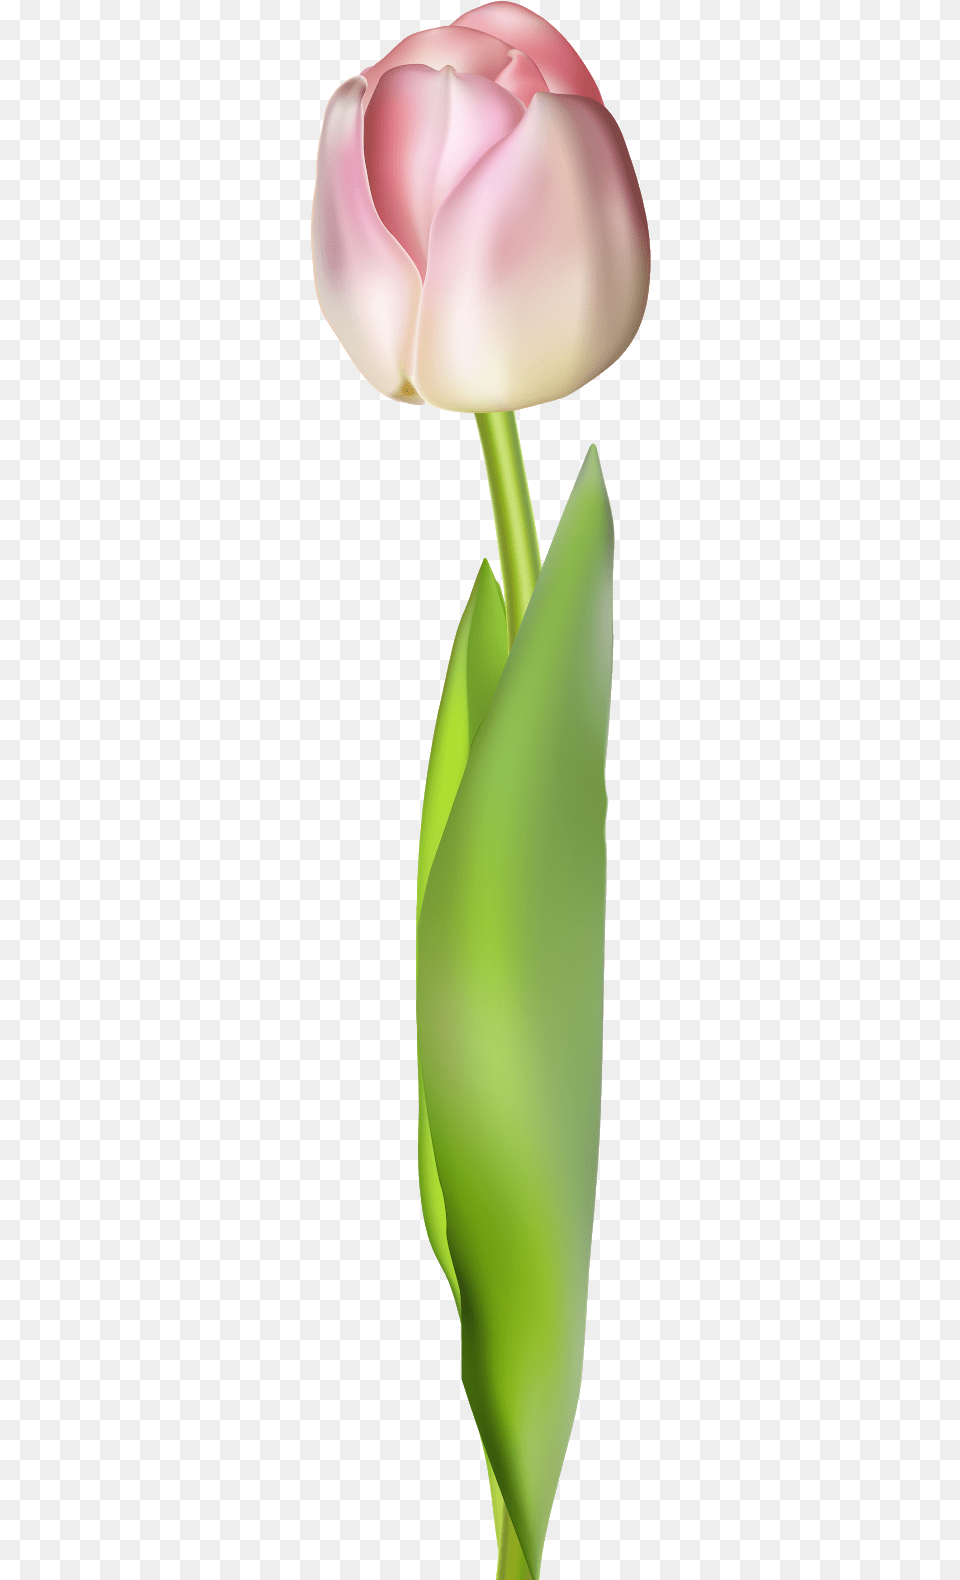 Aloe, Flower, Plant, Tulip, Petal Png Image